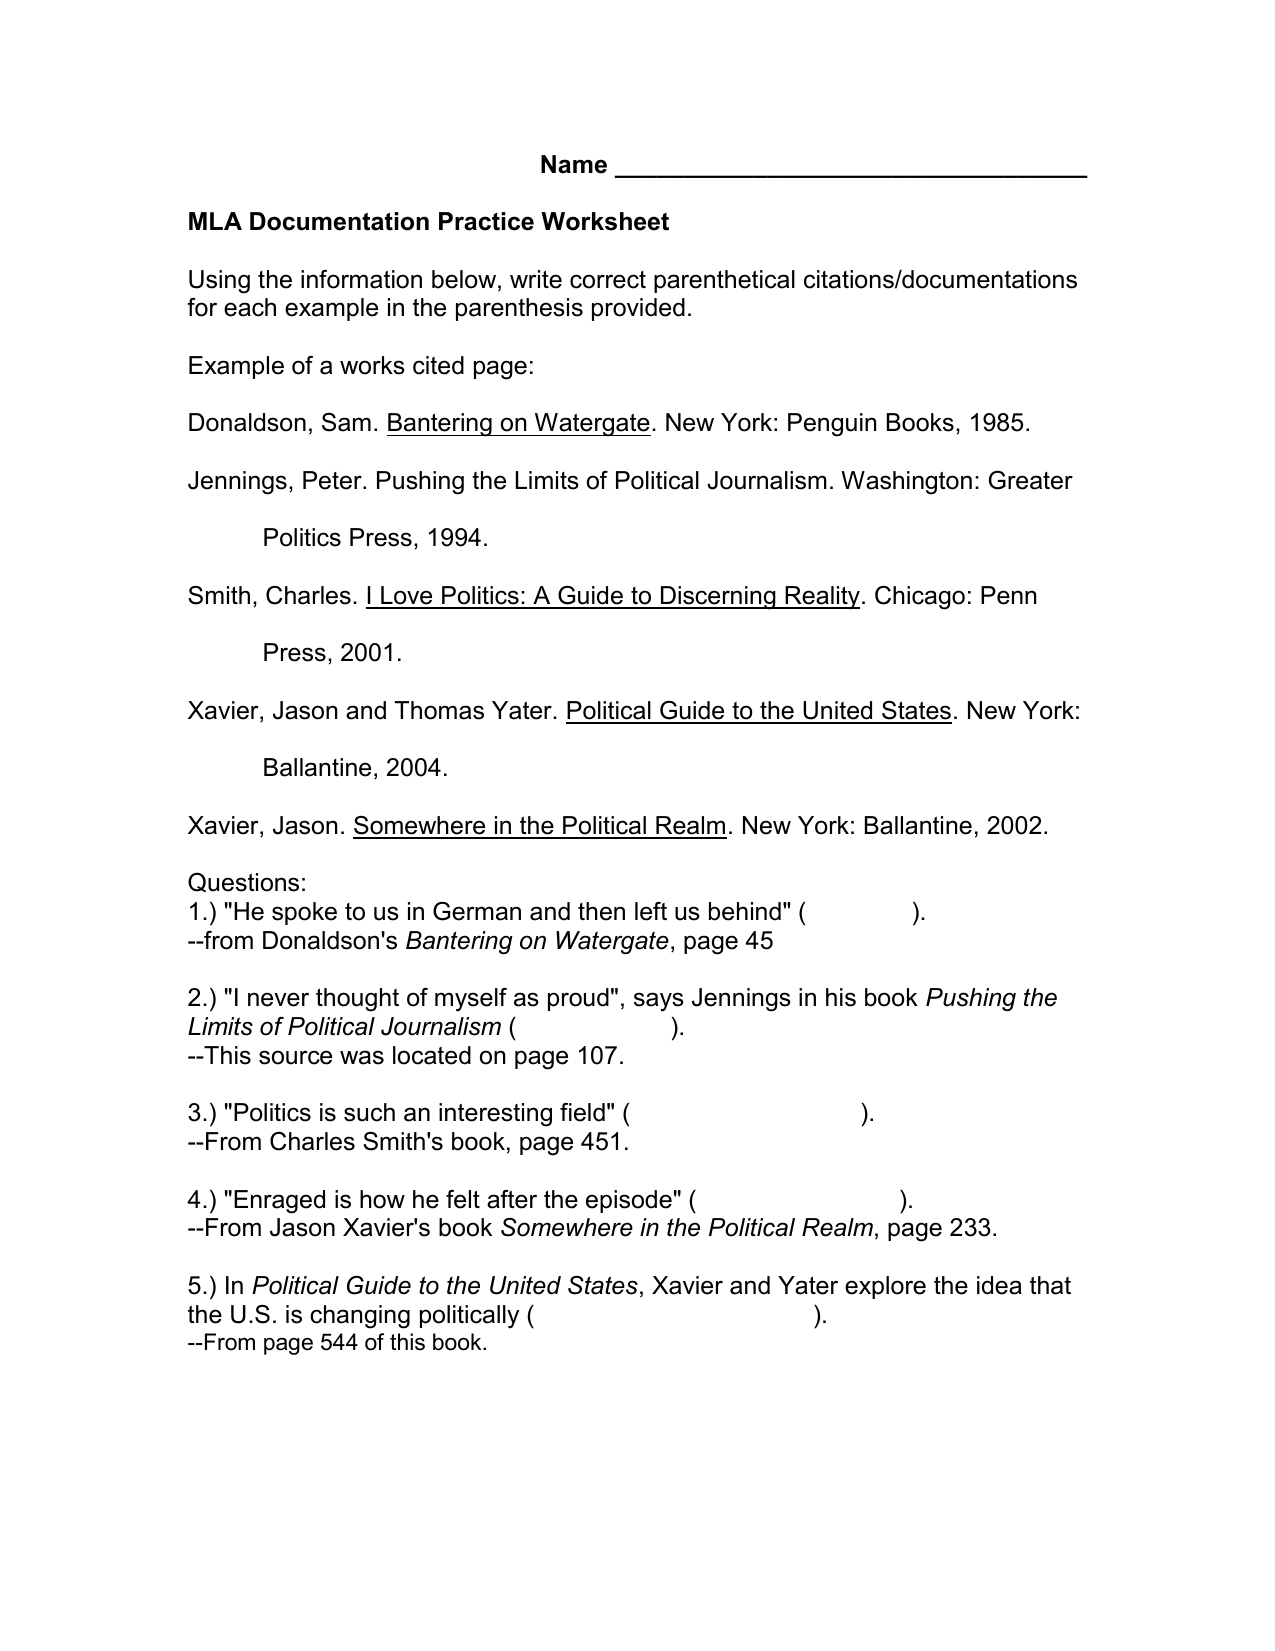 mla-documentation-practice-worksheet-10